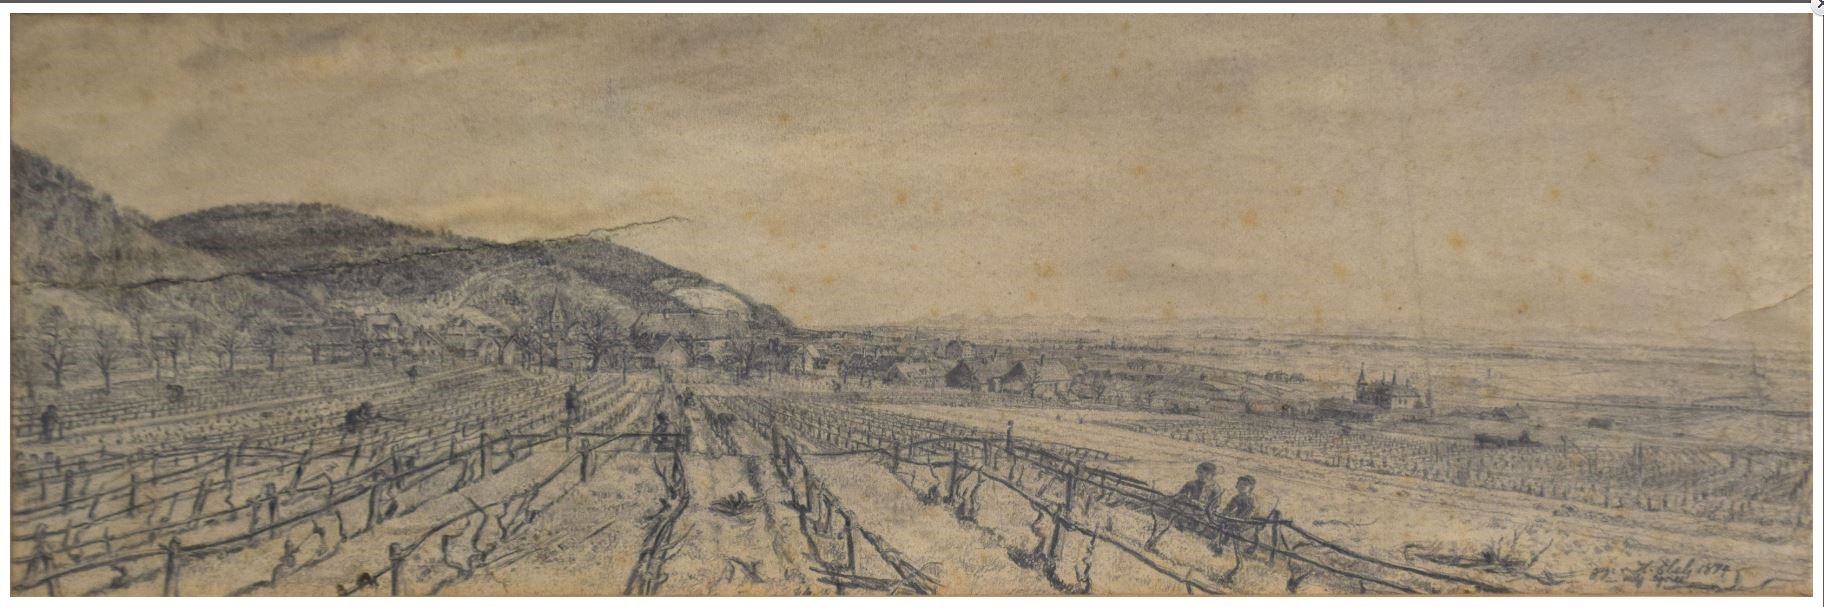 Gimmeldingen, village natal d'Ebel, 1894, dessin, vue générale) 15x45 cm source Karnerz Art Luxembourg.